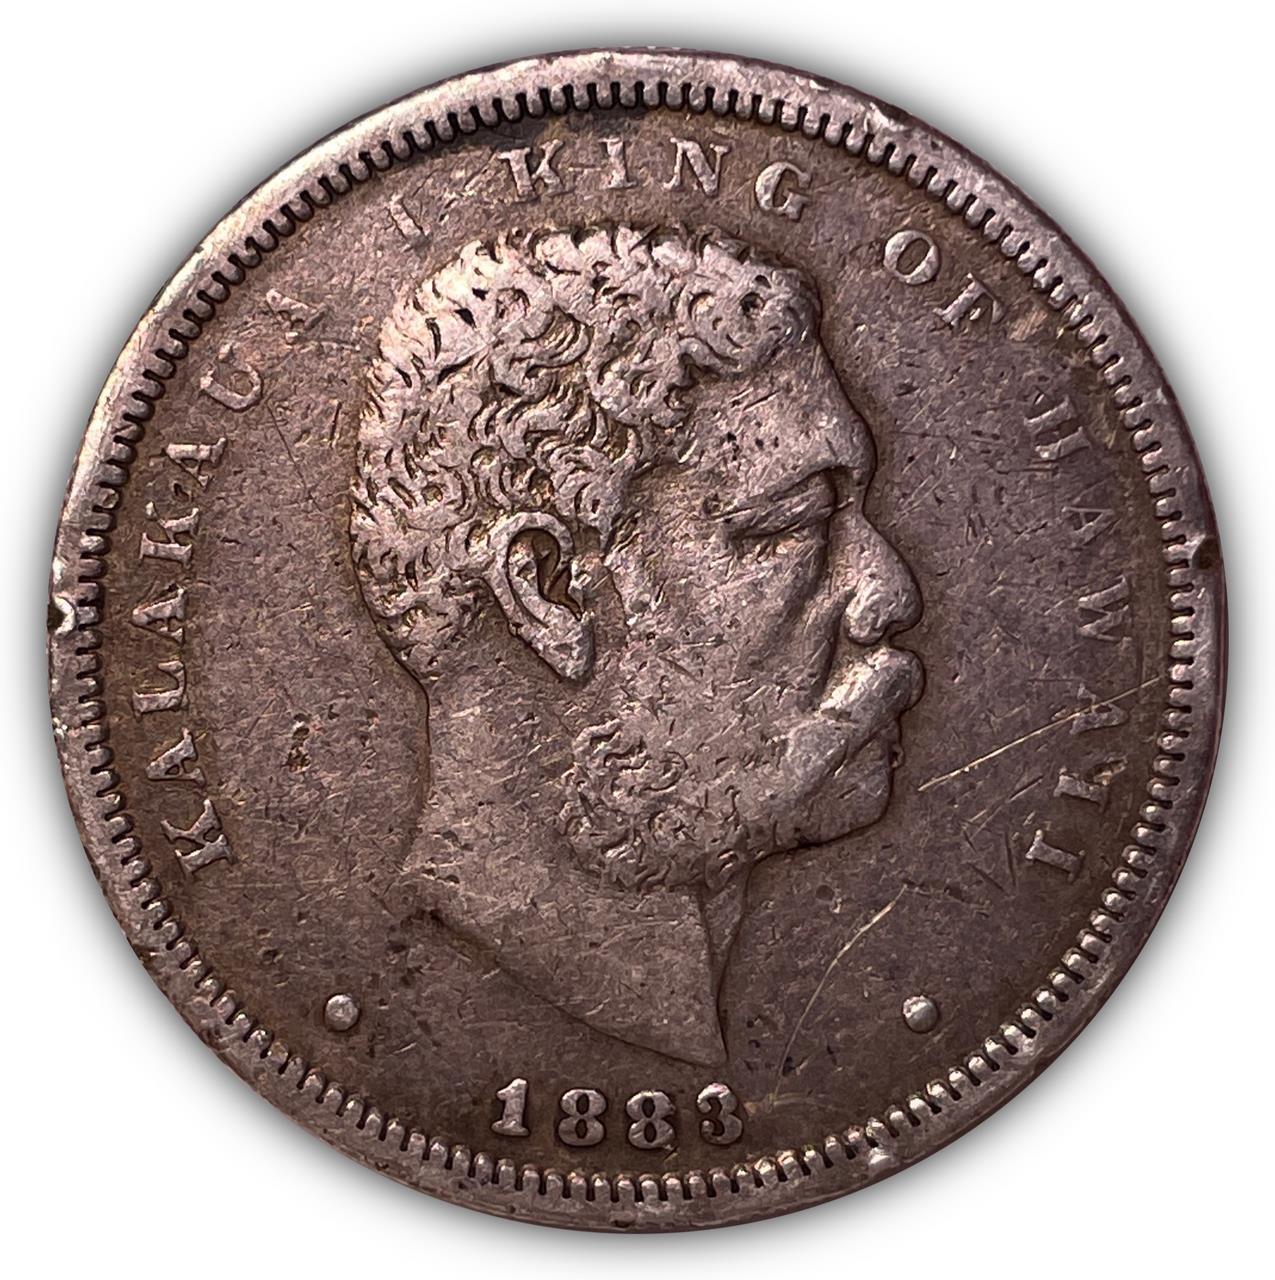 1883 Kingdom of Hawaii Half Dollar Extremely Fine XF Coin #4752